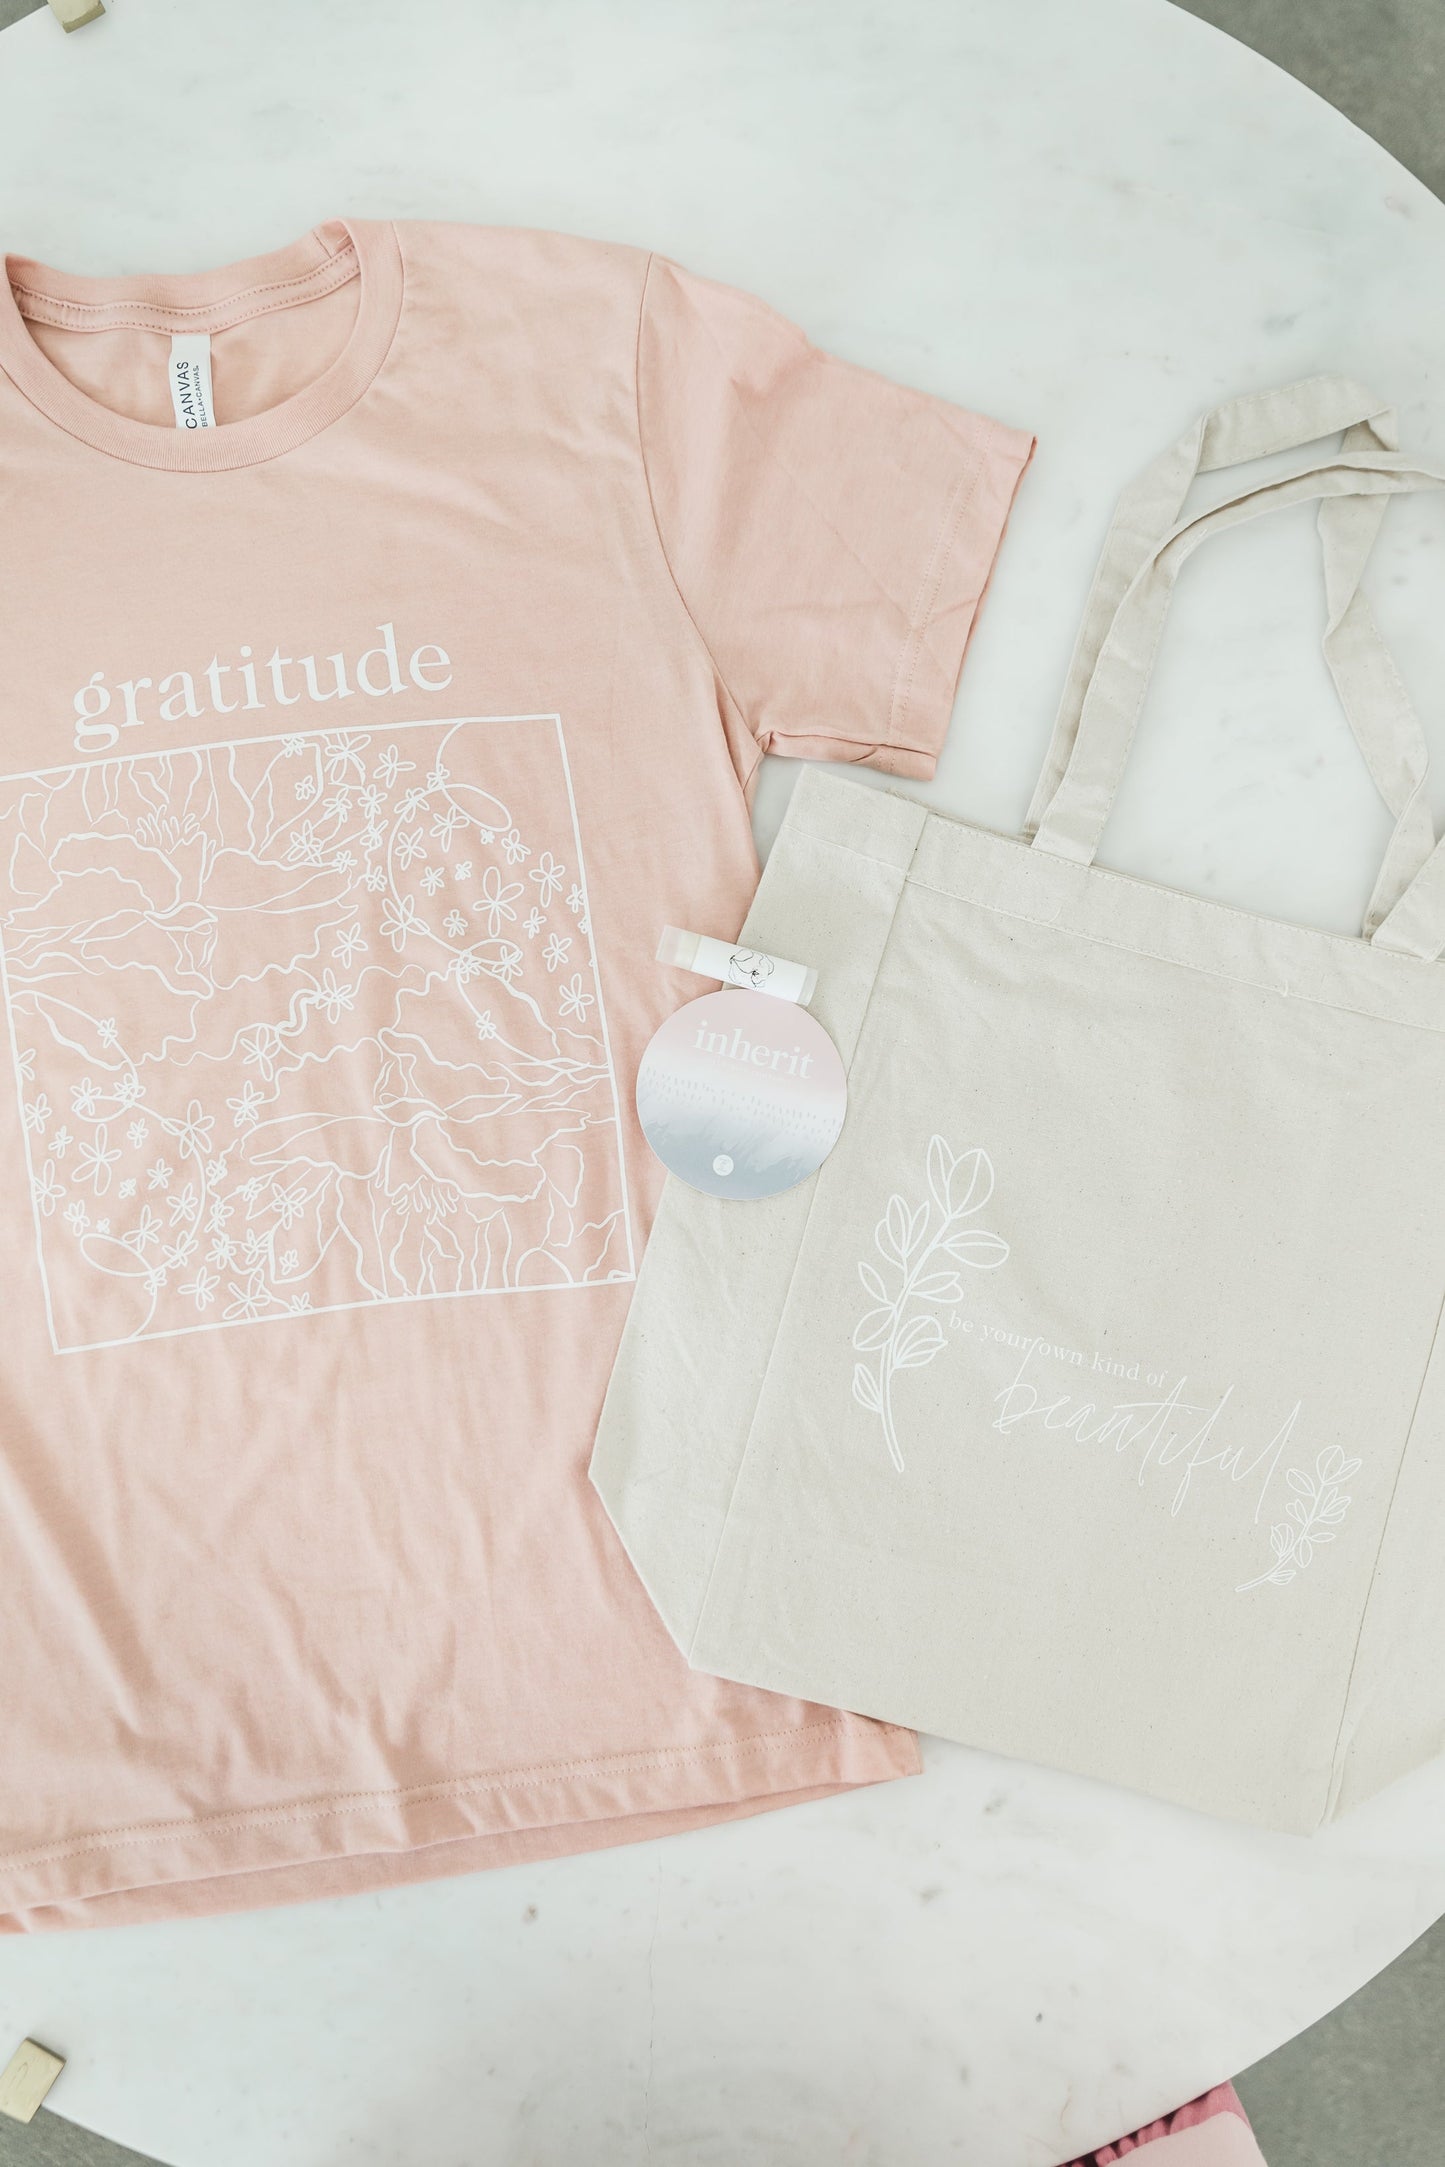 Gratitude Gift Bundle - FINAL SALE Home & Lifestyle